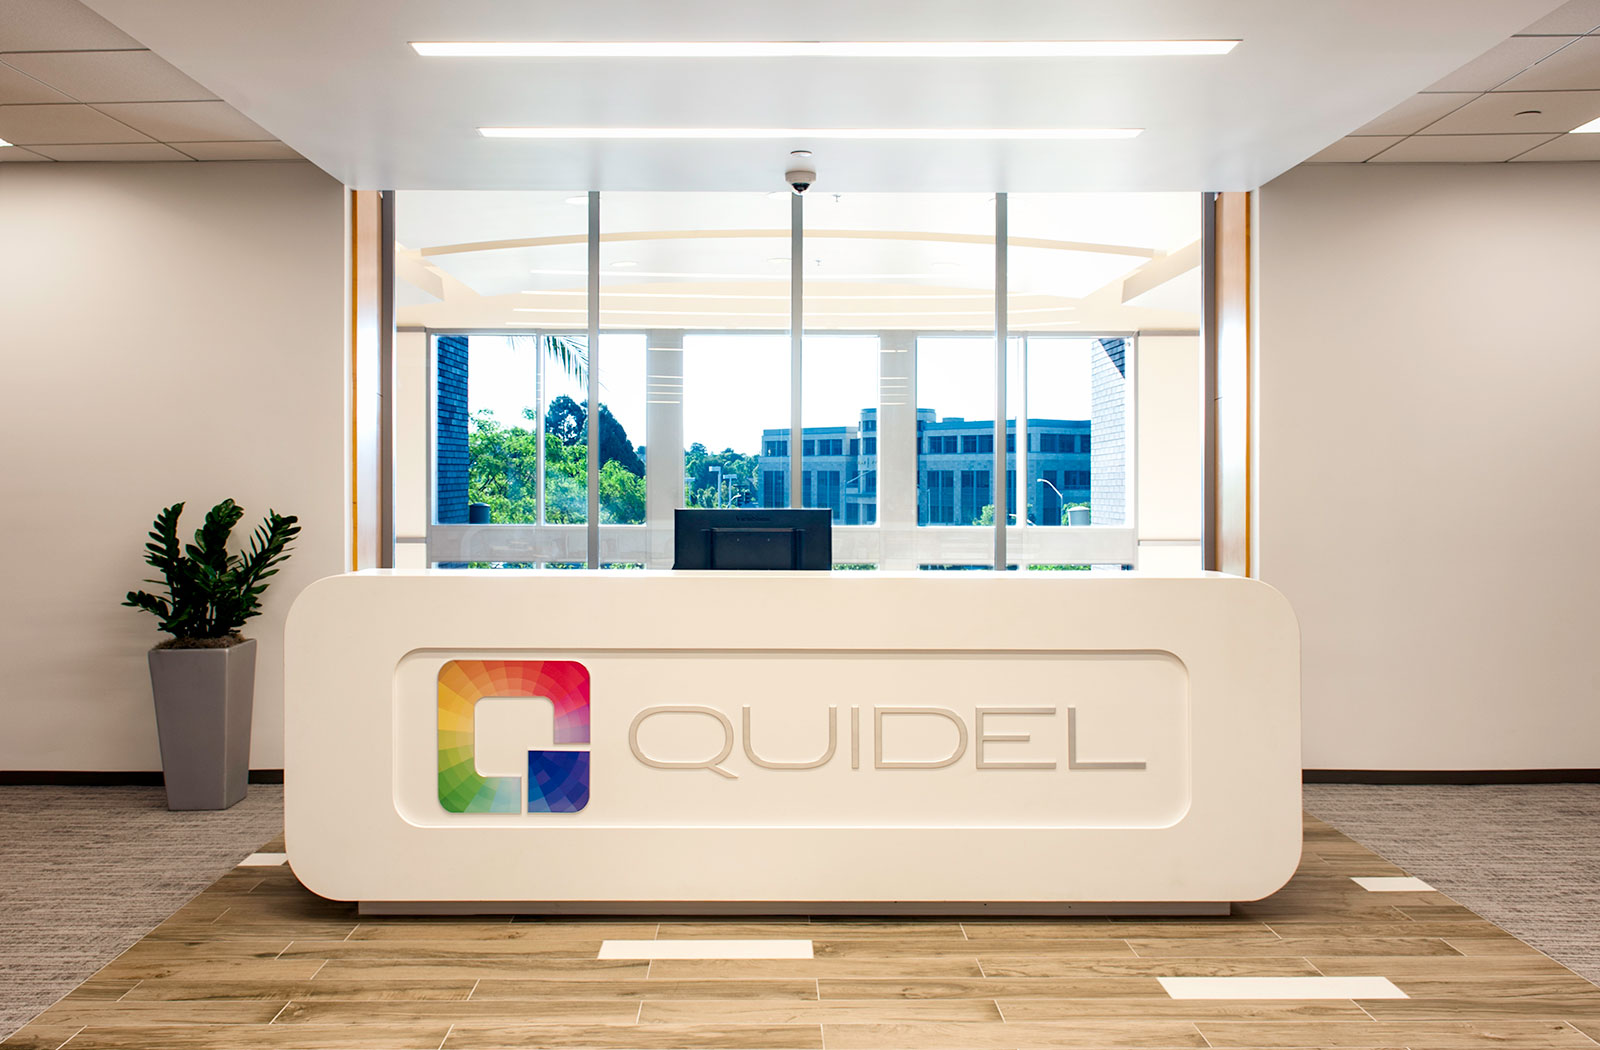 Quidel reception desk